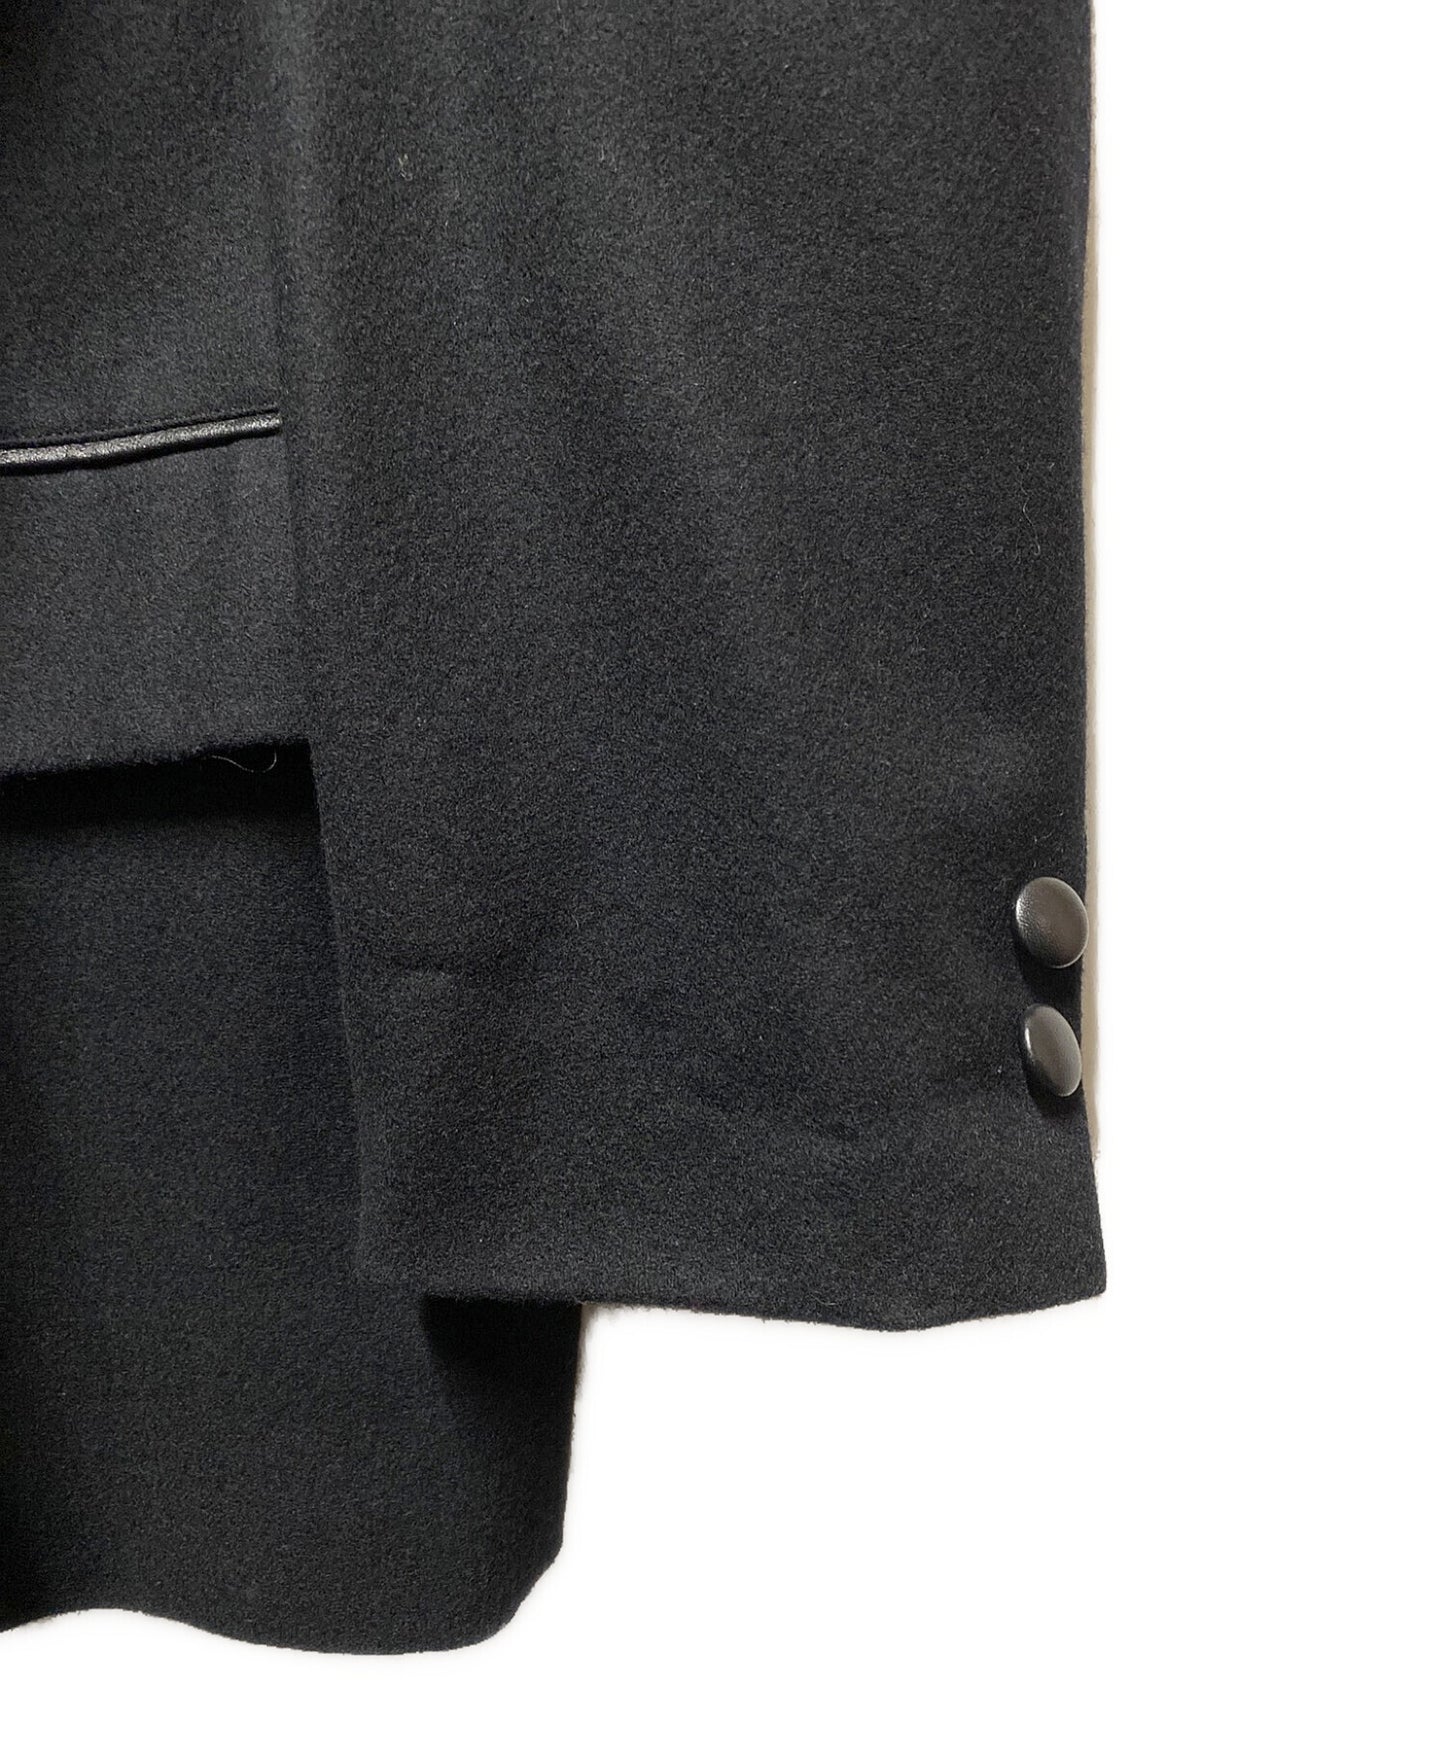 Yohji Yamamoto Pour Homme Leather Loater羊毛夹克HN-J05-151